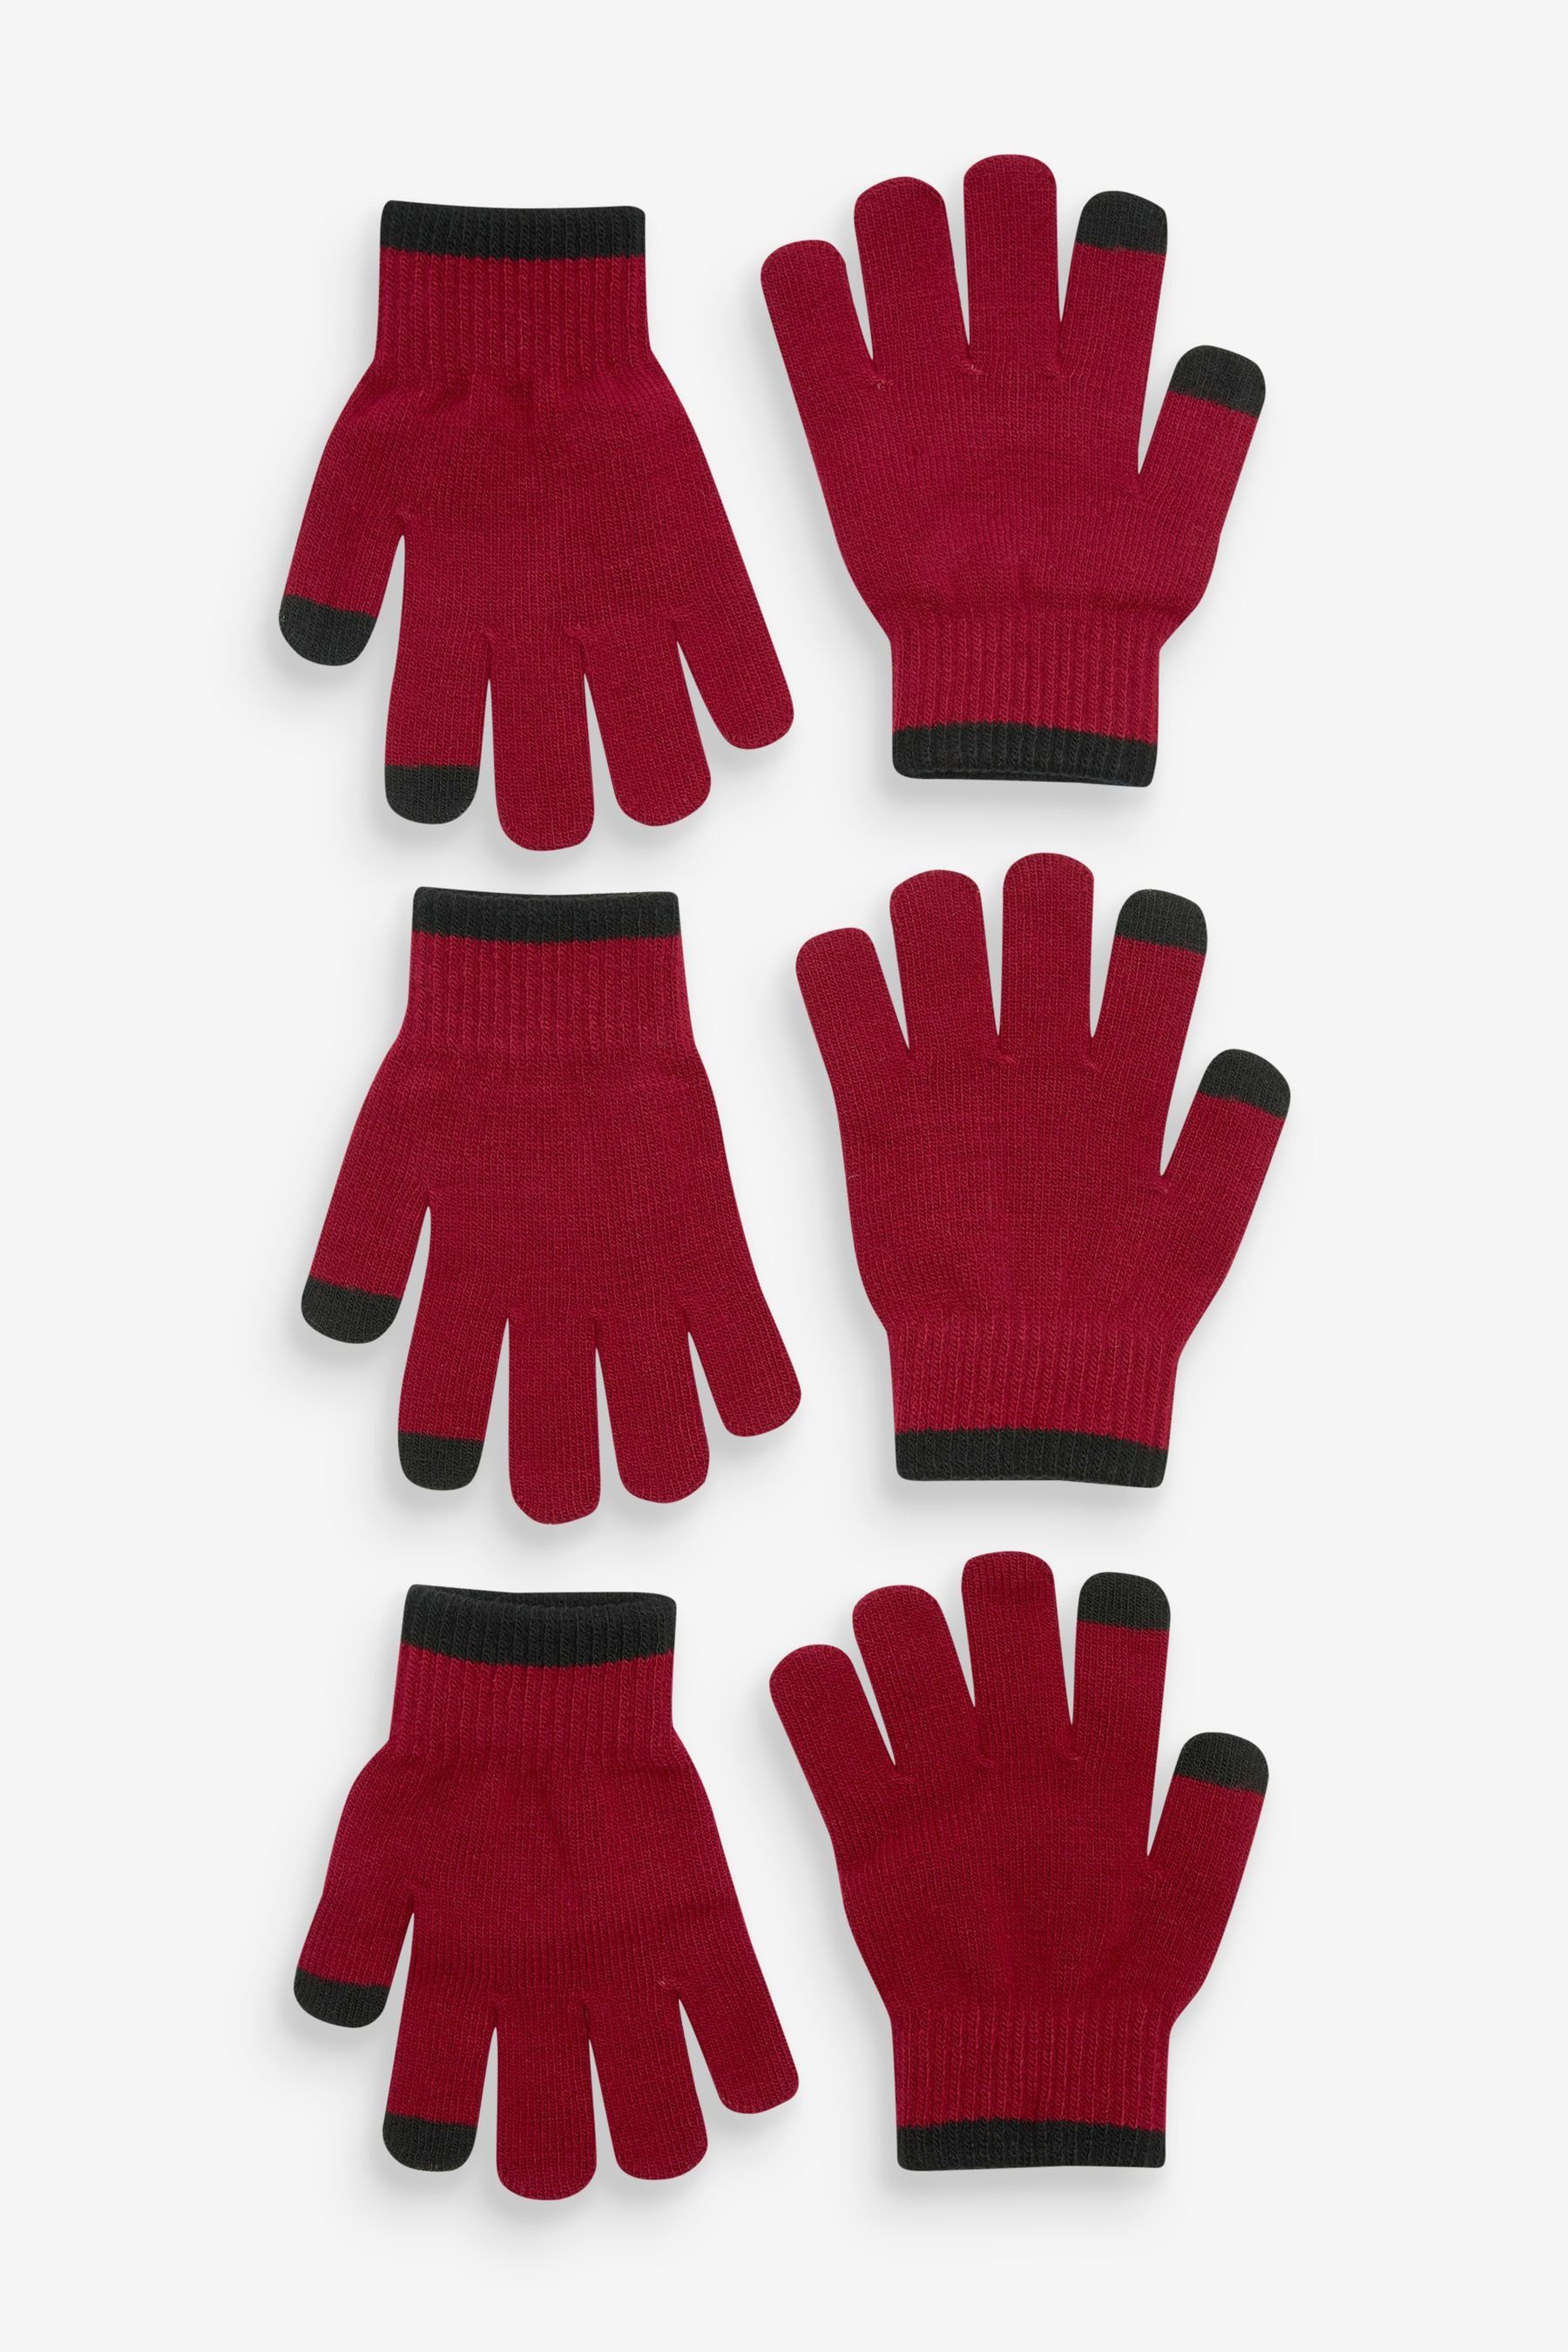 Next Strickhandschuhe Handschuhe, 3er-Pack Red